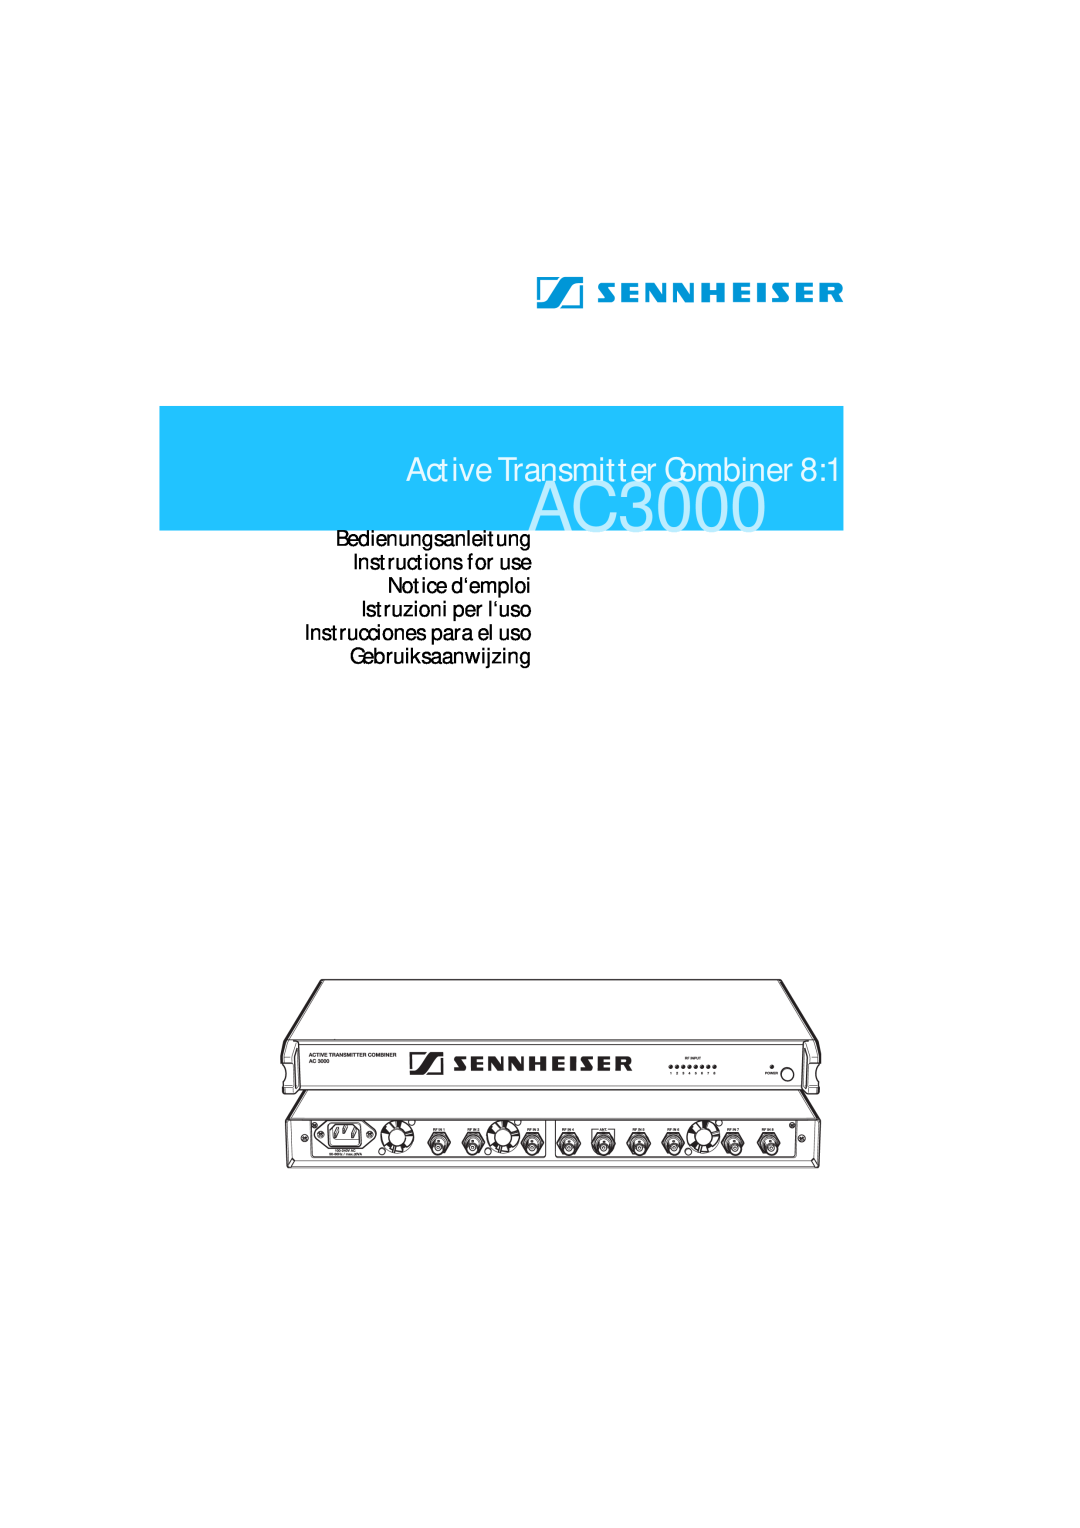 Sennheiser manual BedienungsanleitungAC 3000 Instructions for use, Active Transmitter Combiner 